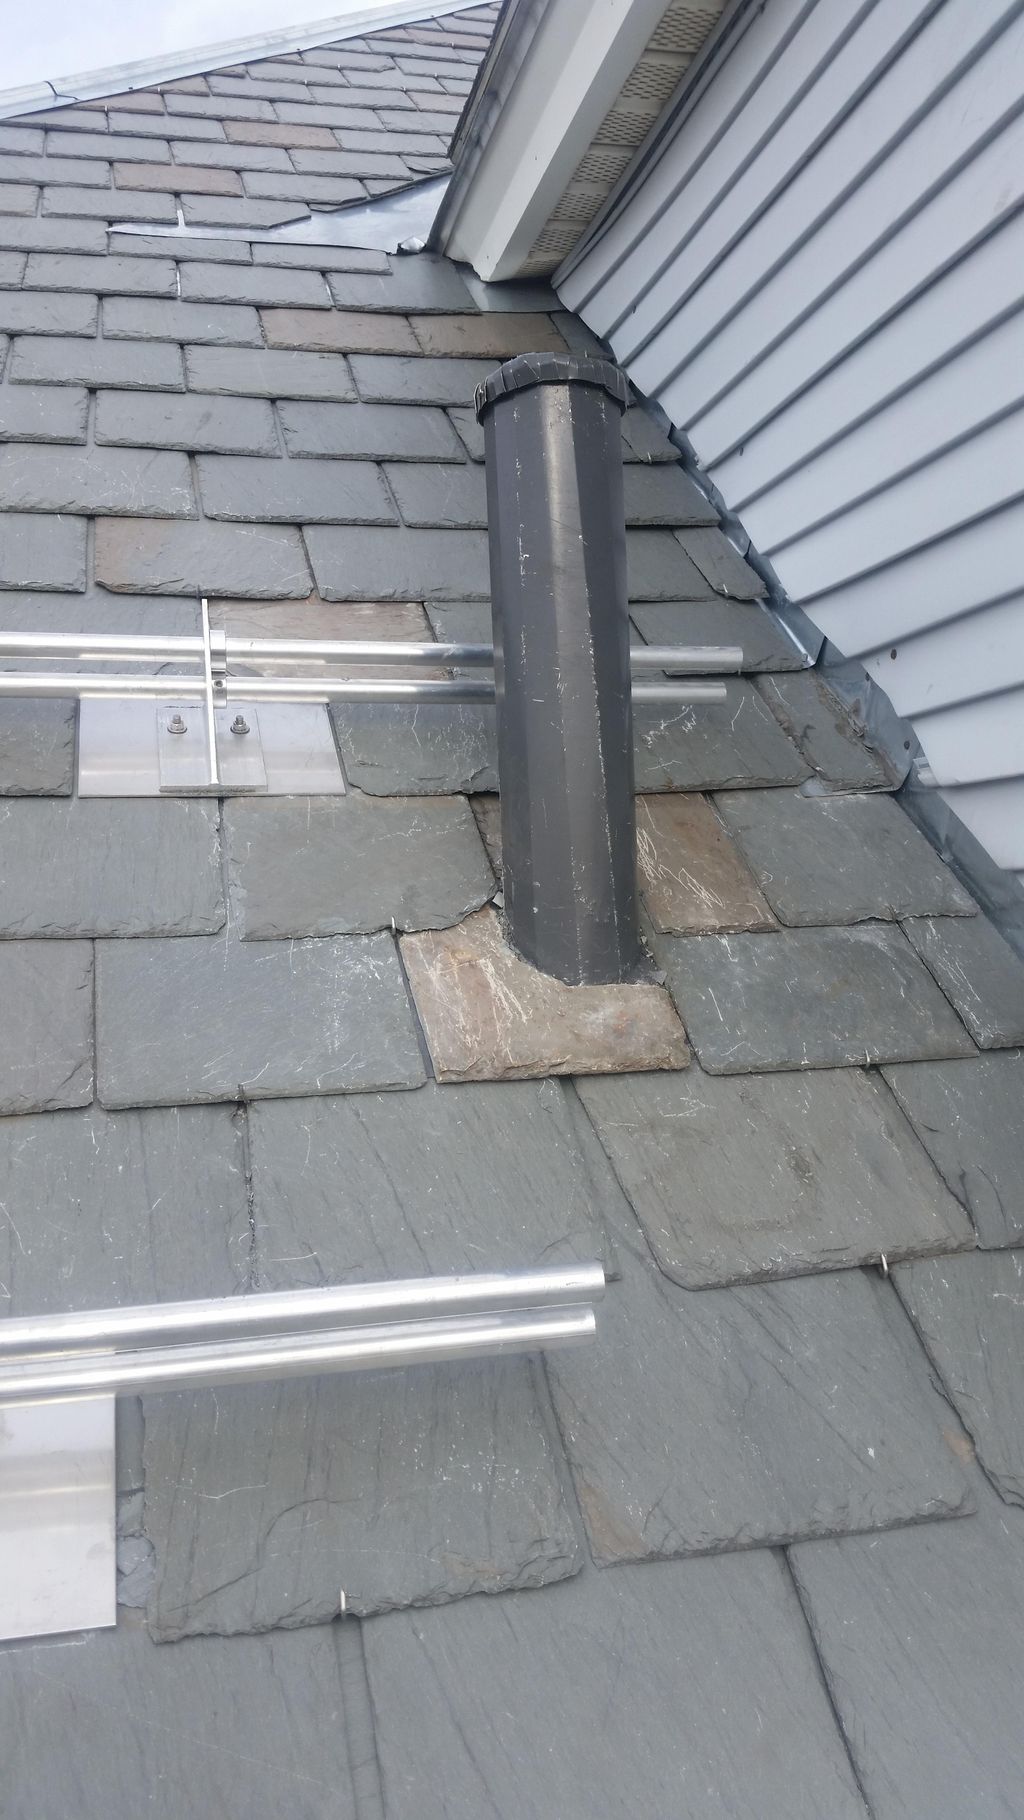 Vermont Roof Repair and Maintenance